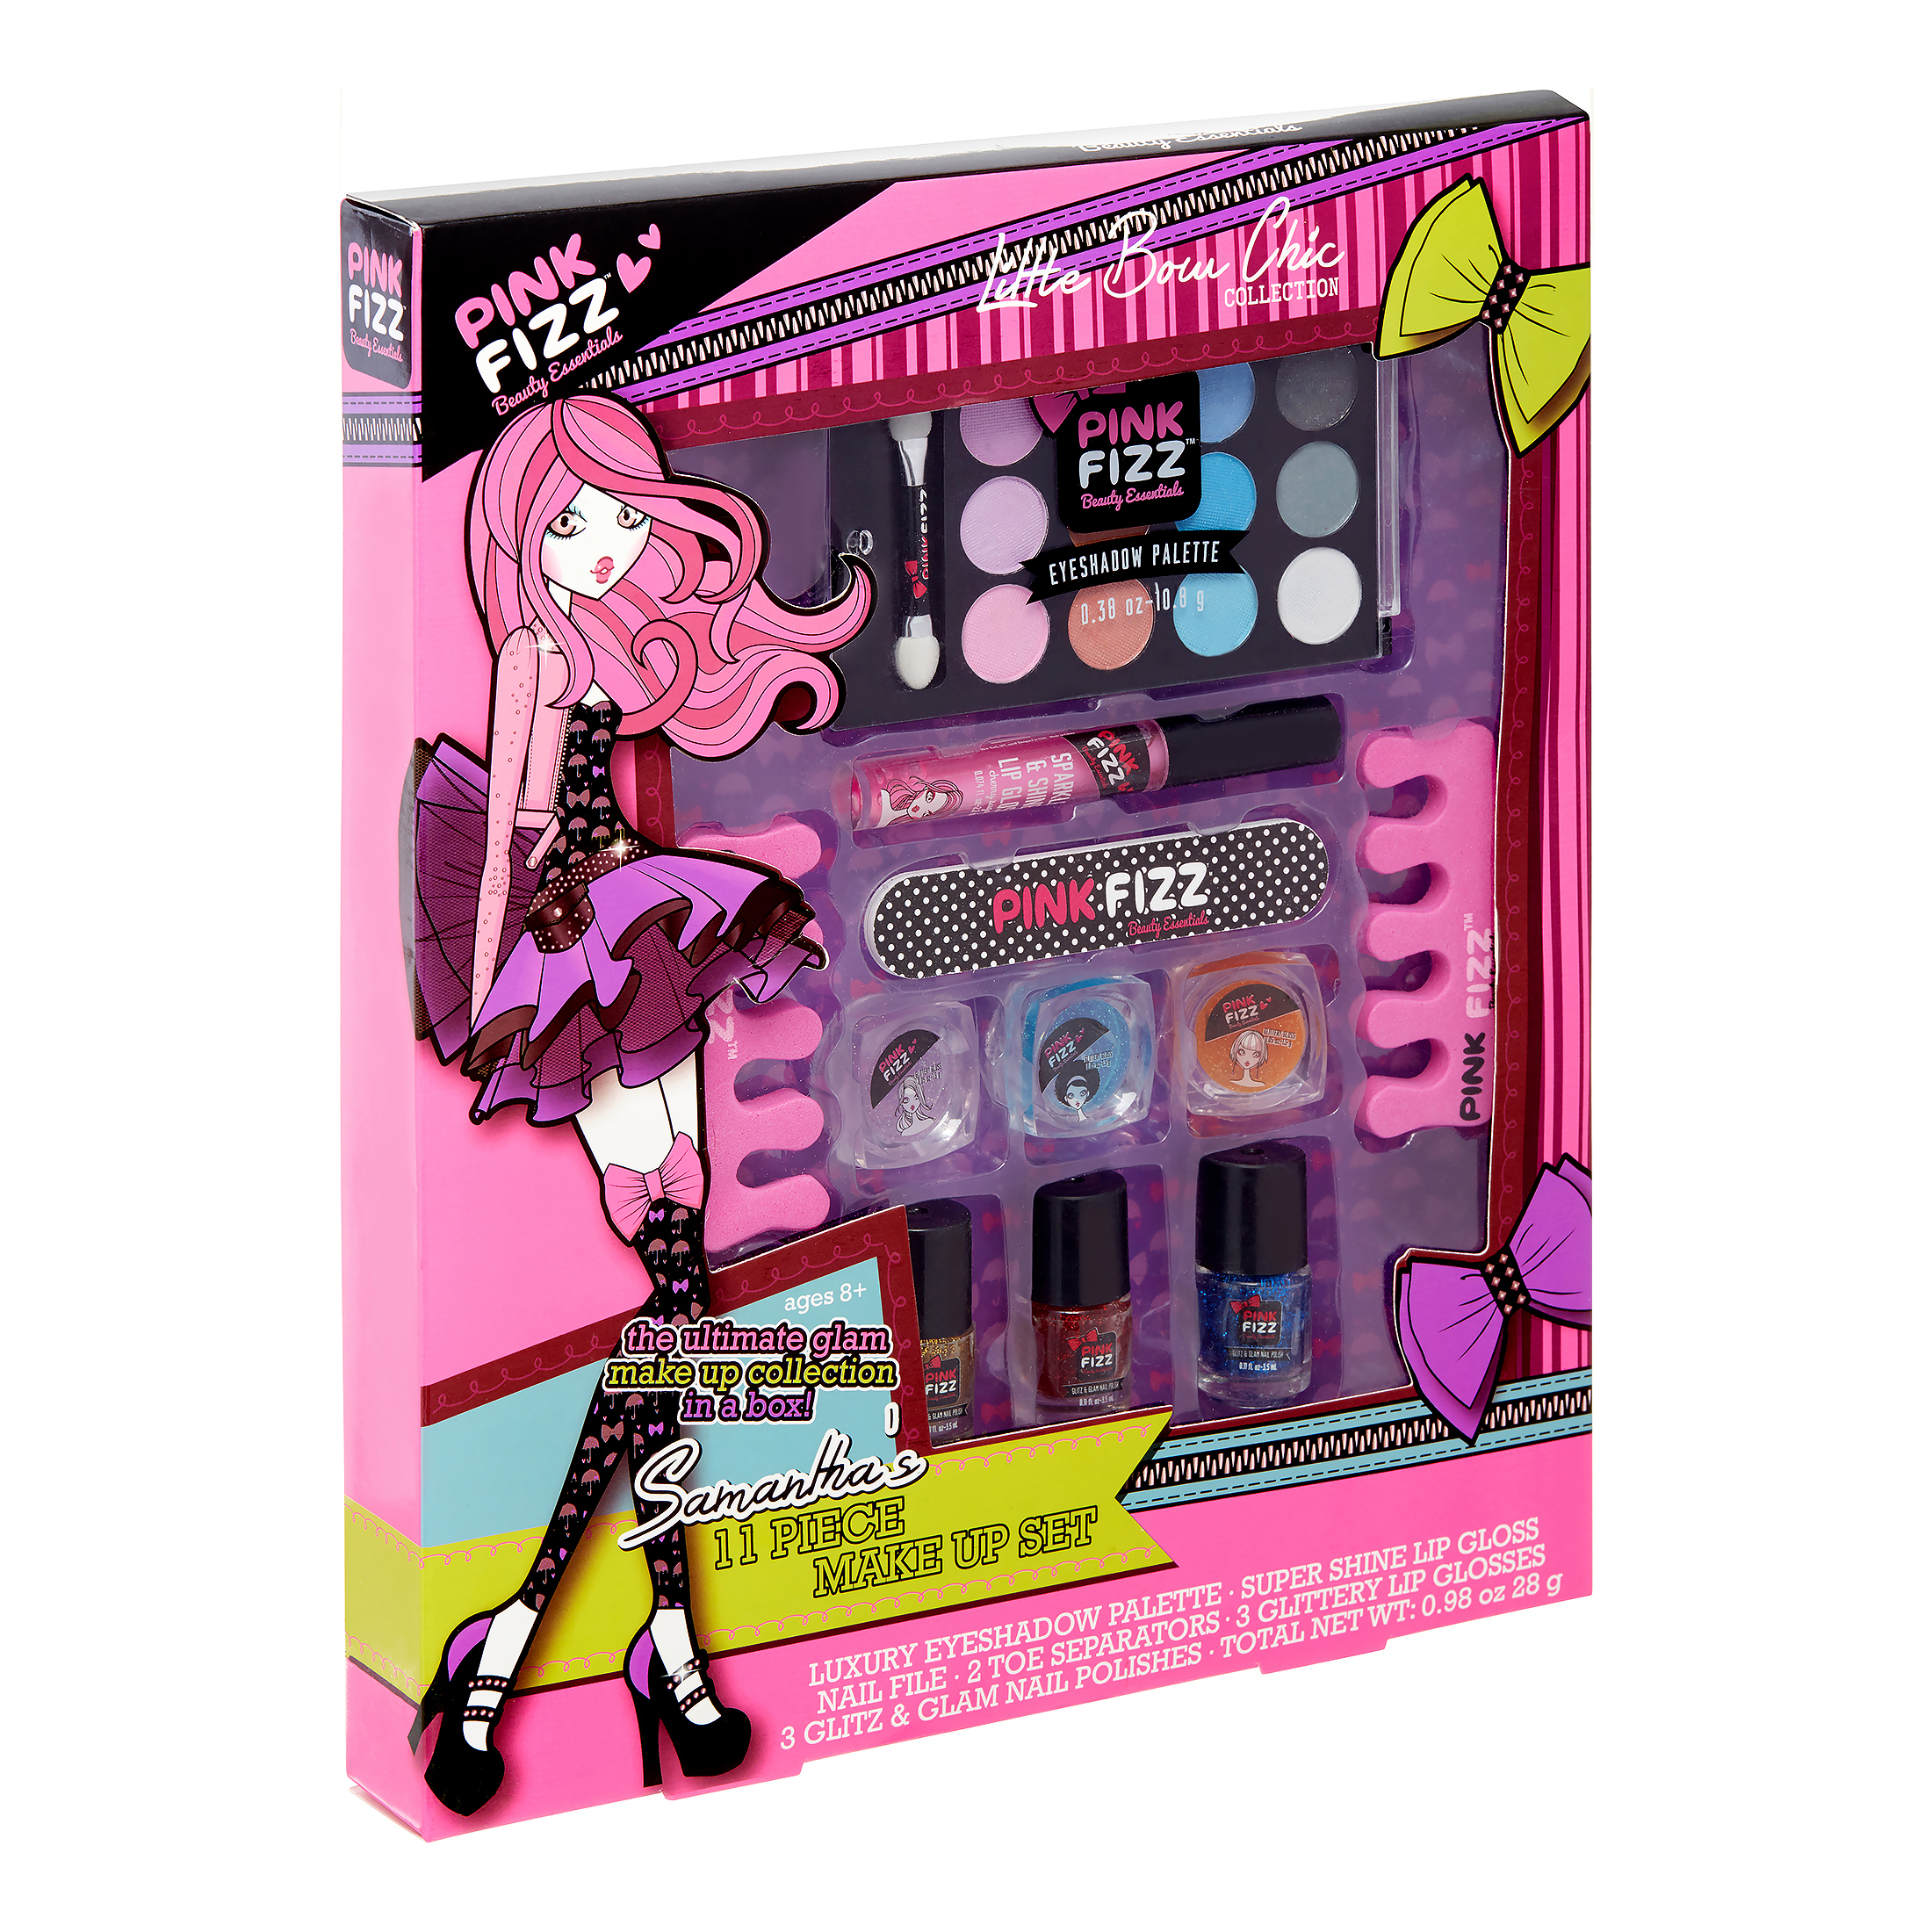 Pink Fizz Little Bow Chic Makeup Set, 11 Pieces - image 3 of 6